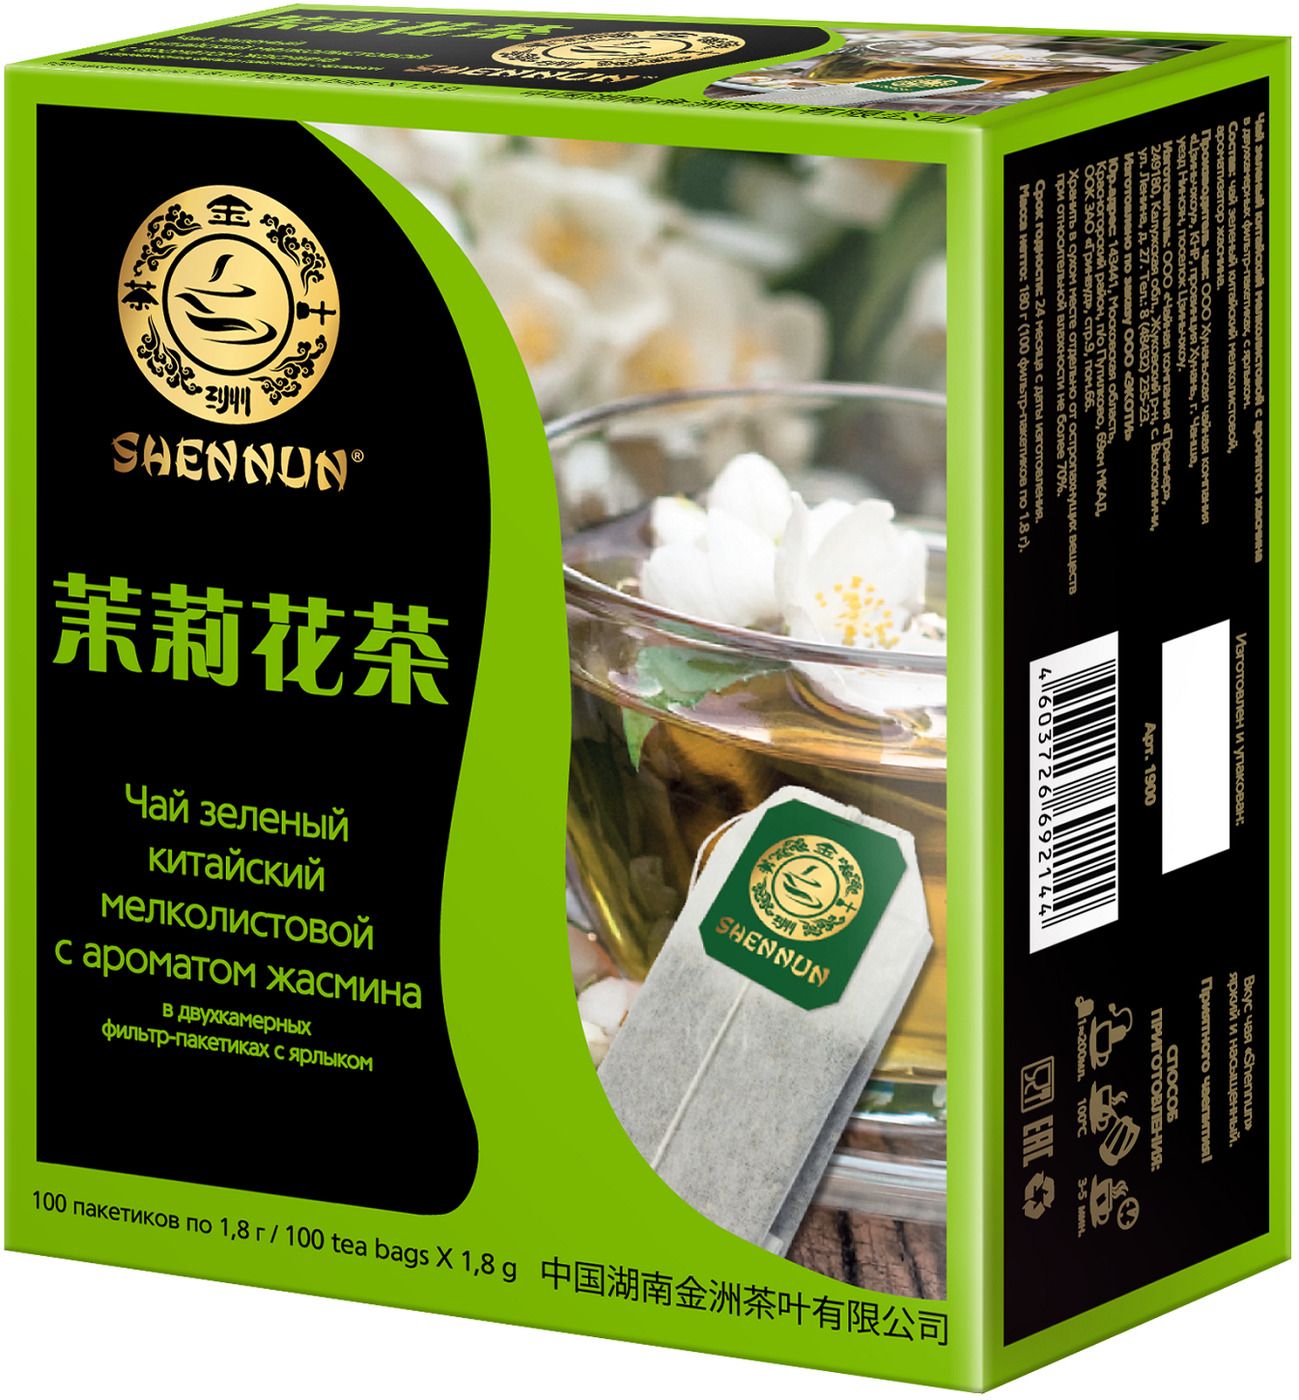 Китайский чай с жасмином. Чай зеленый Shennun. Чай зеленый Shennun, 100 г. Зеленый чай жасмина с араоматам. Чай зеленый Shennun с жасмином в пирамидках.